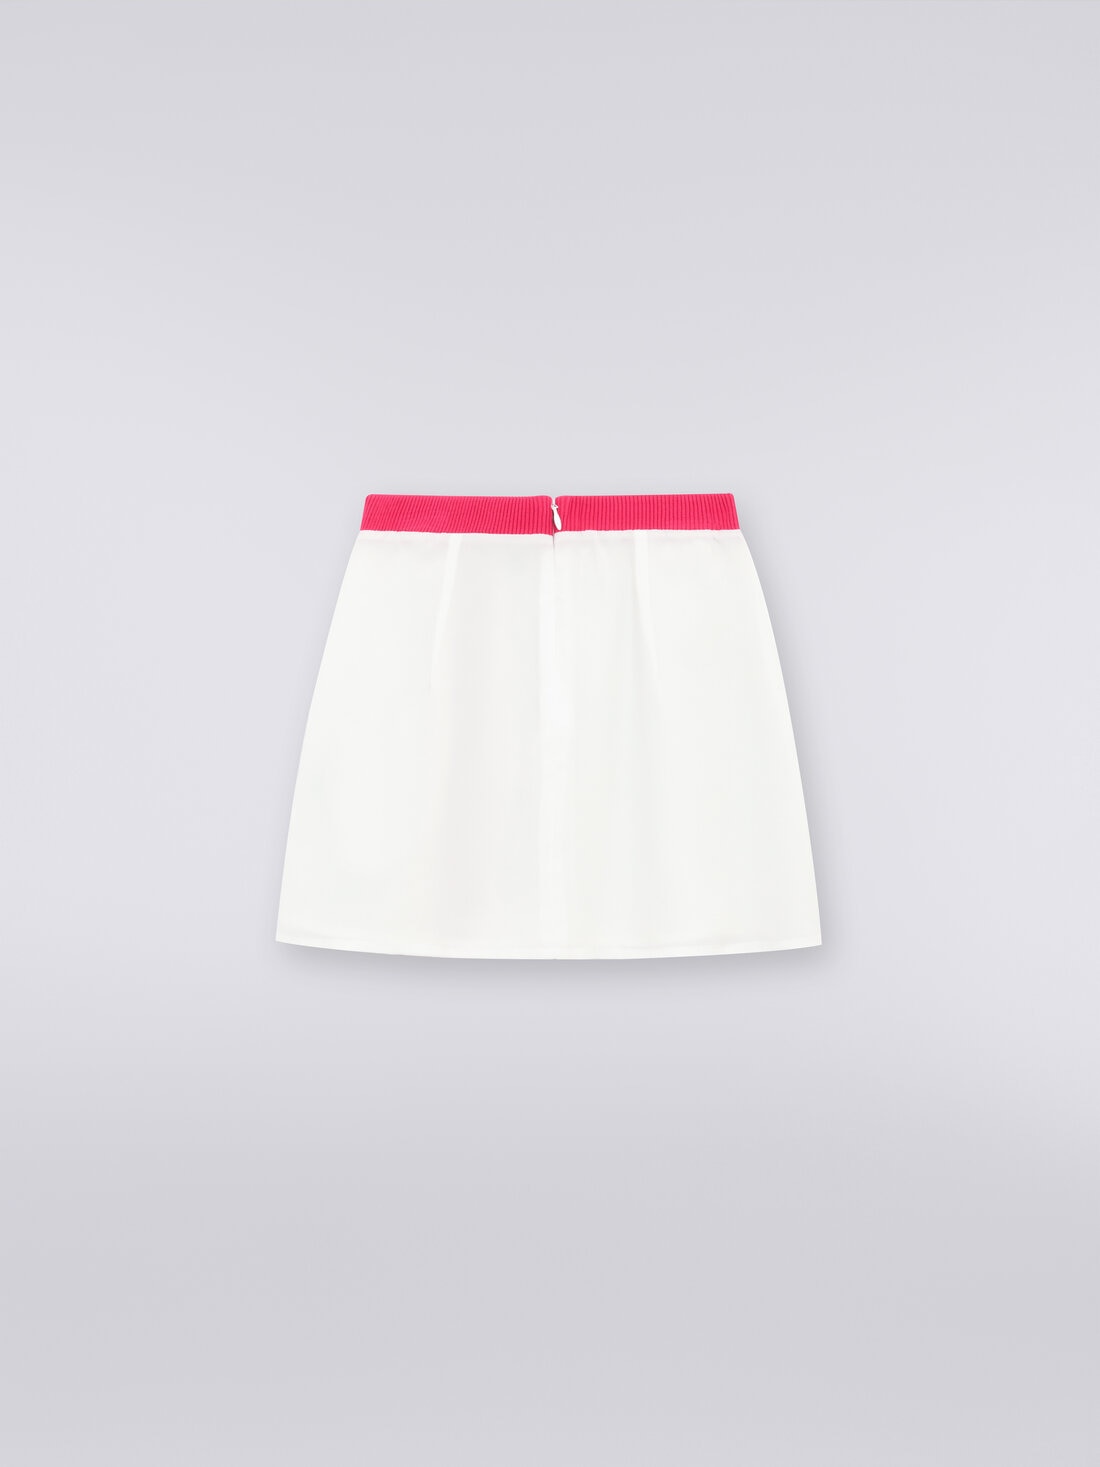 Silk and technical fabric skirt, Pink   - KS23WH05BV00EPS30CJ - 1